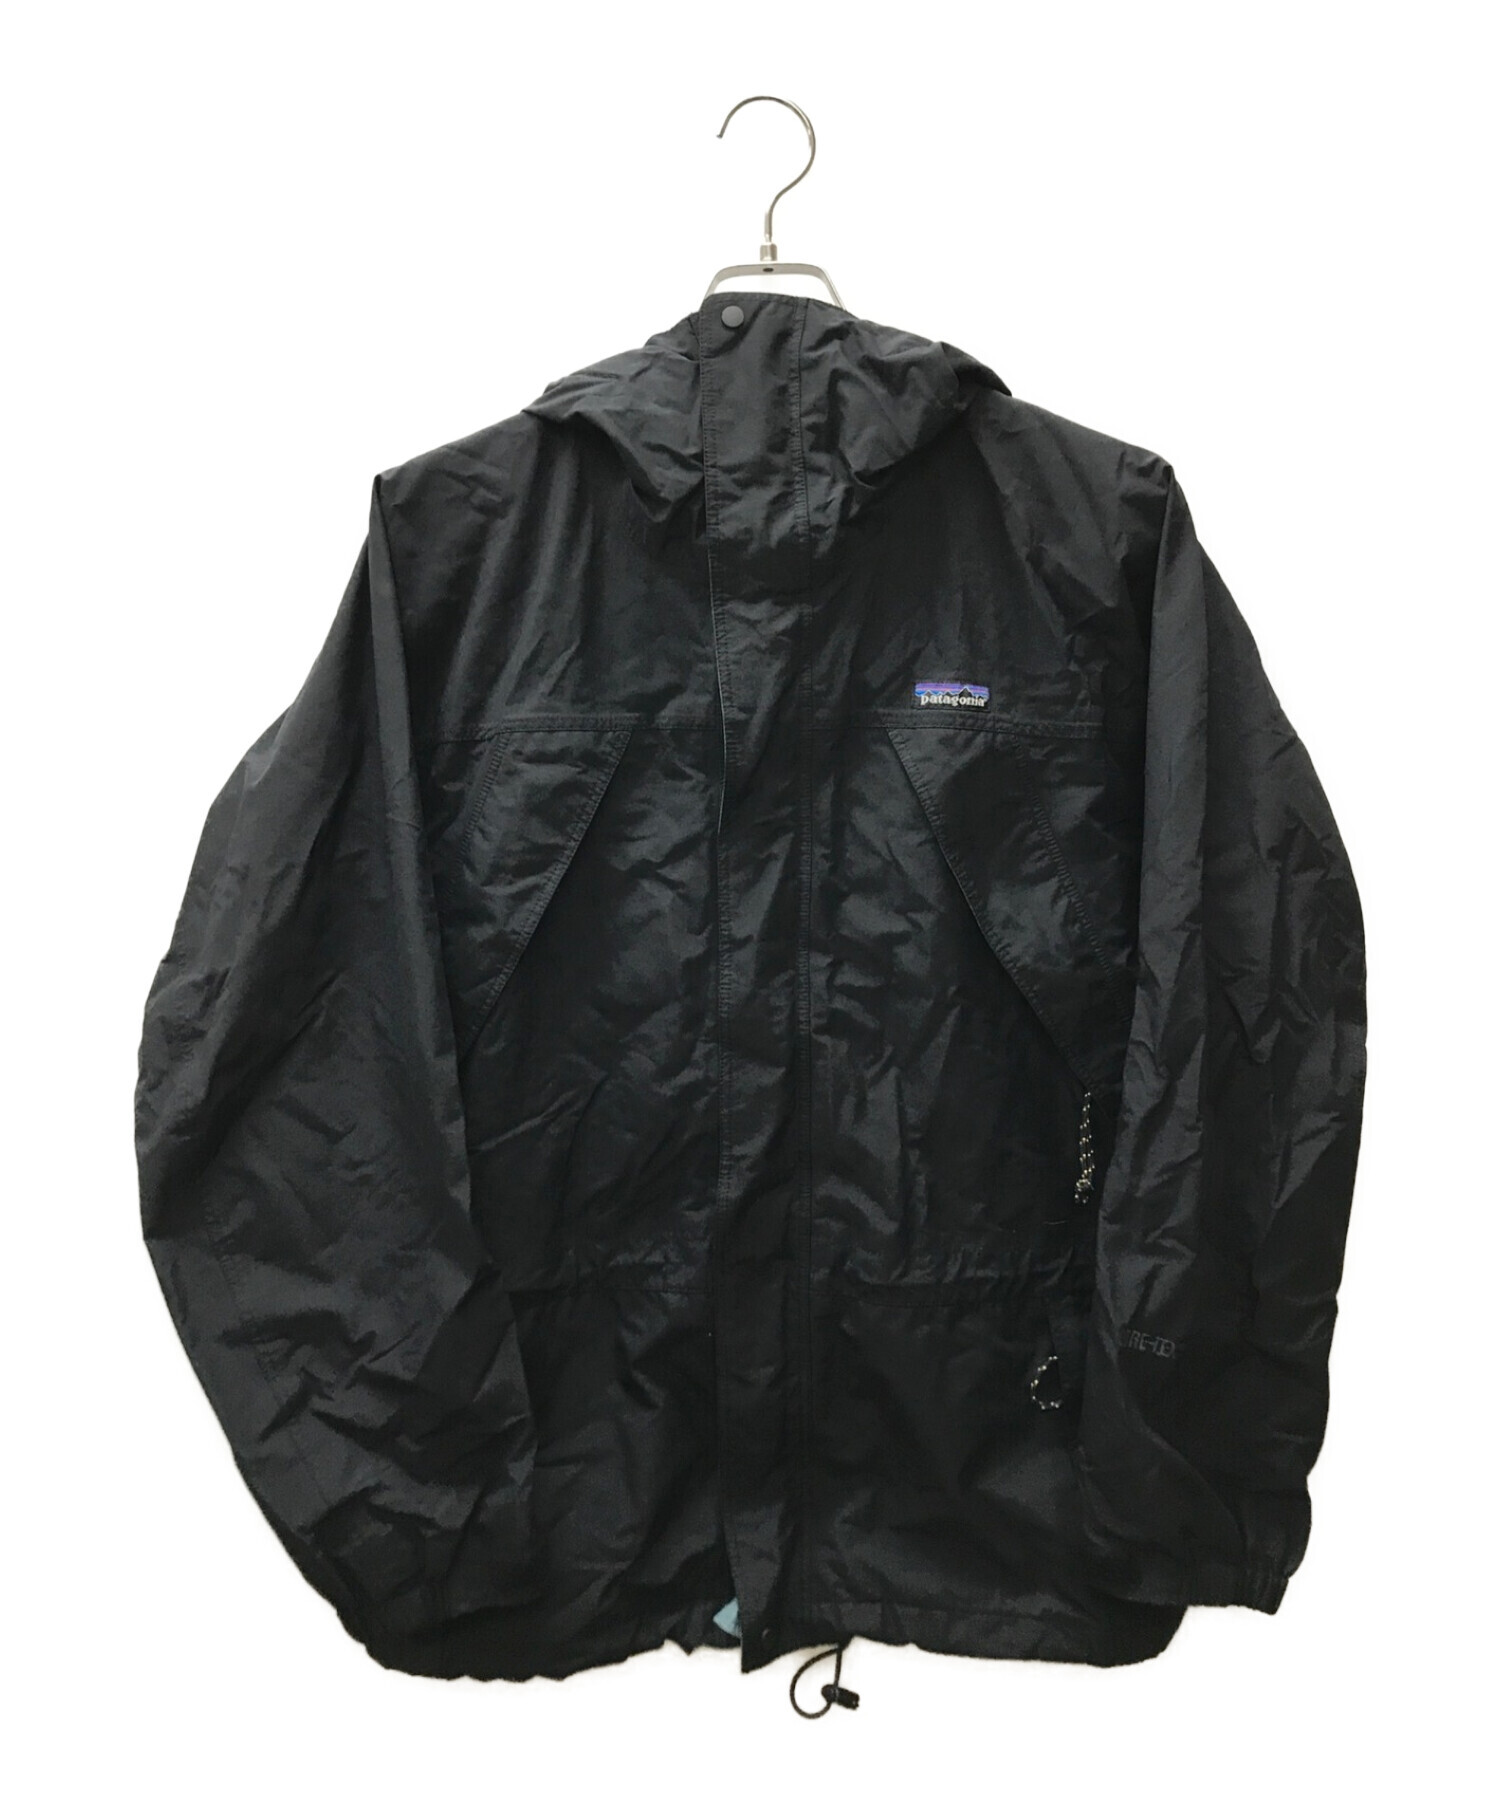 ⬛︎素材patagonia storm jacket gore-tex